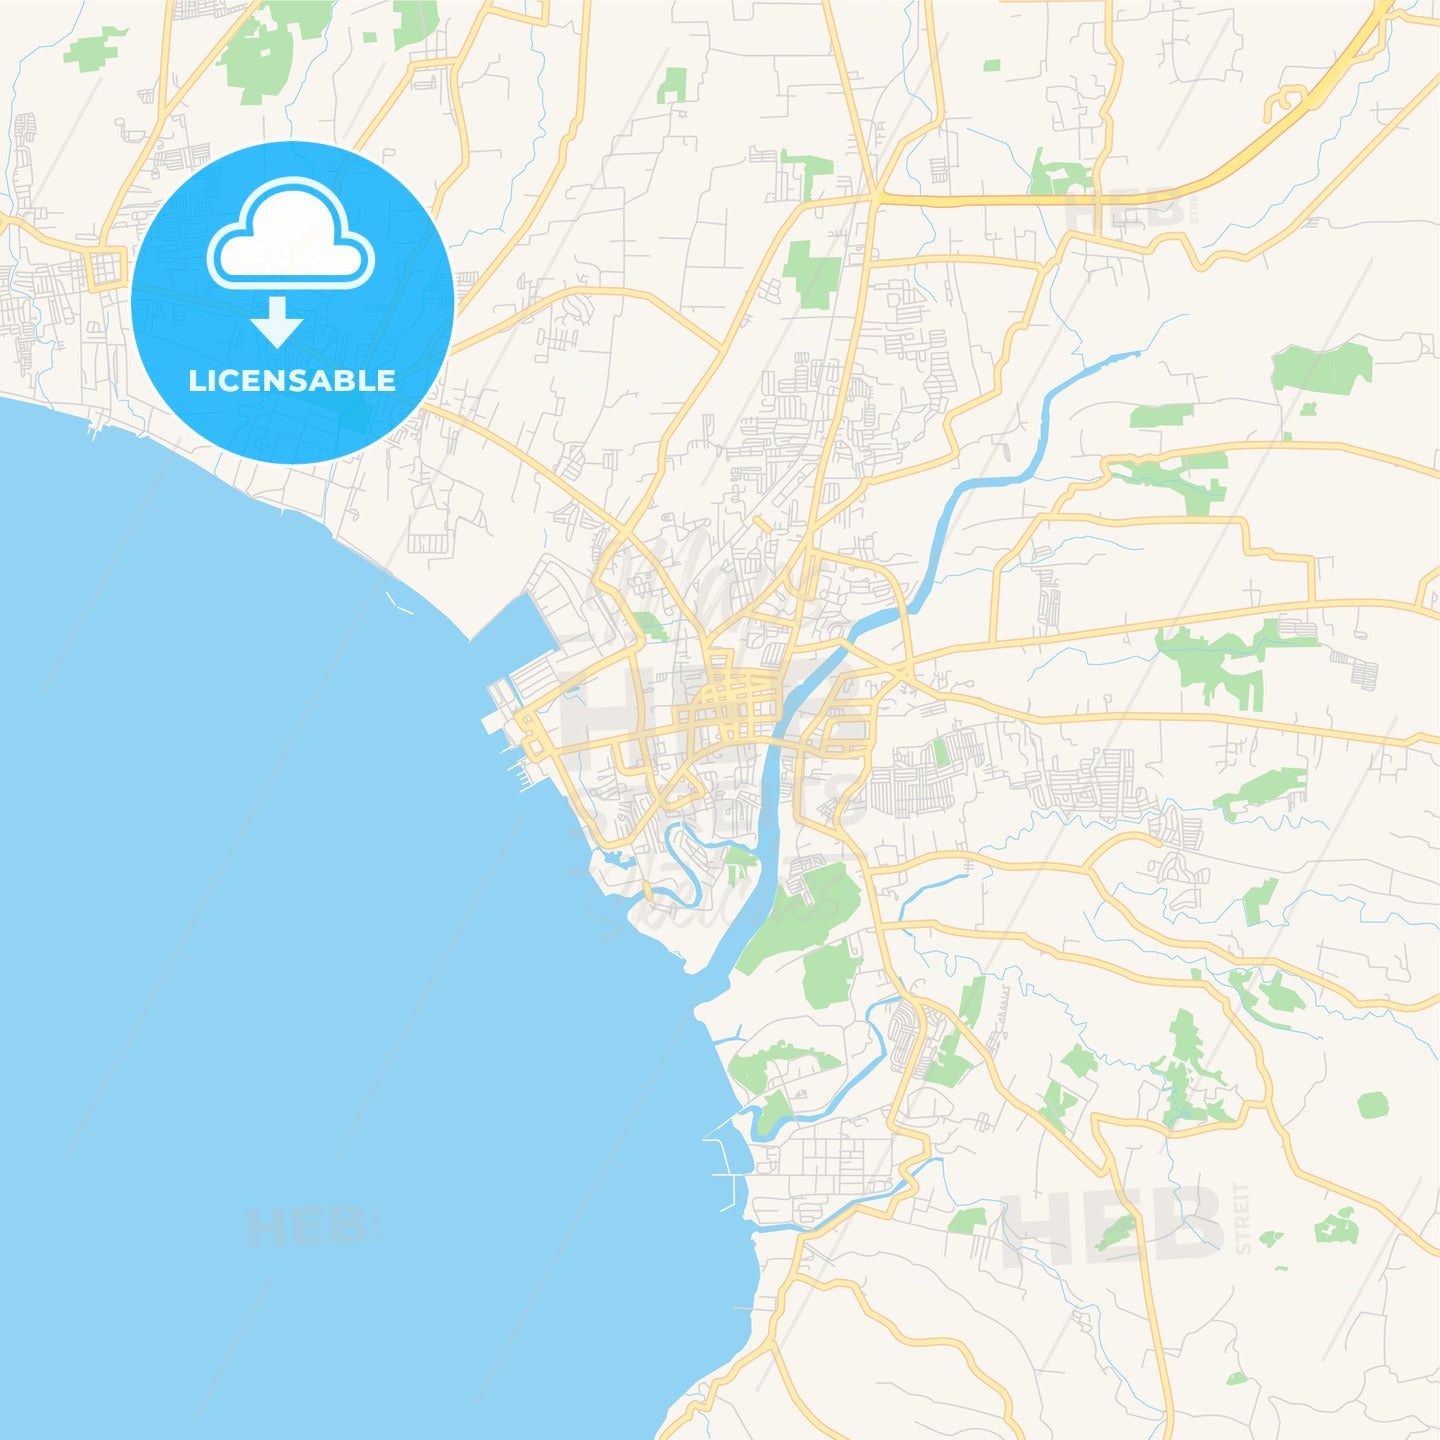 Printable street map of Batangas City, Philippines